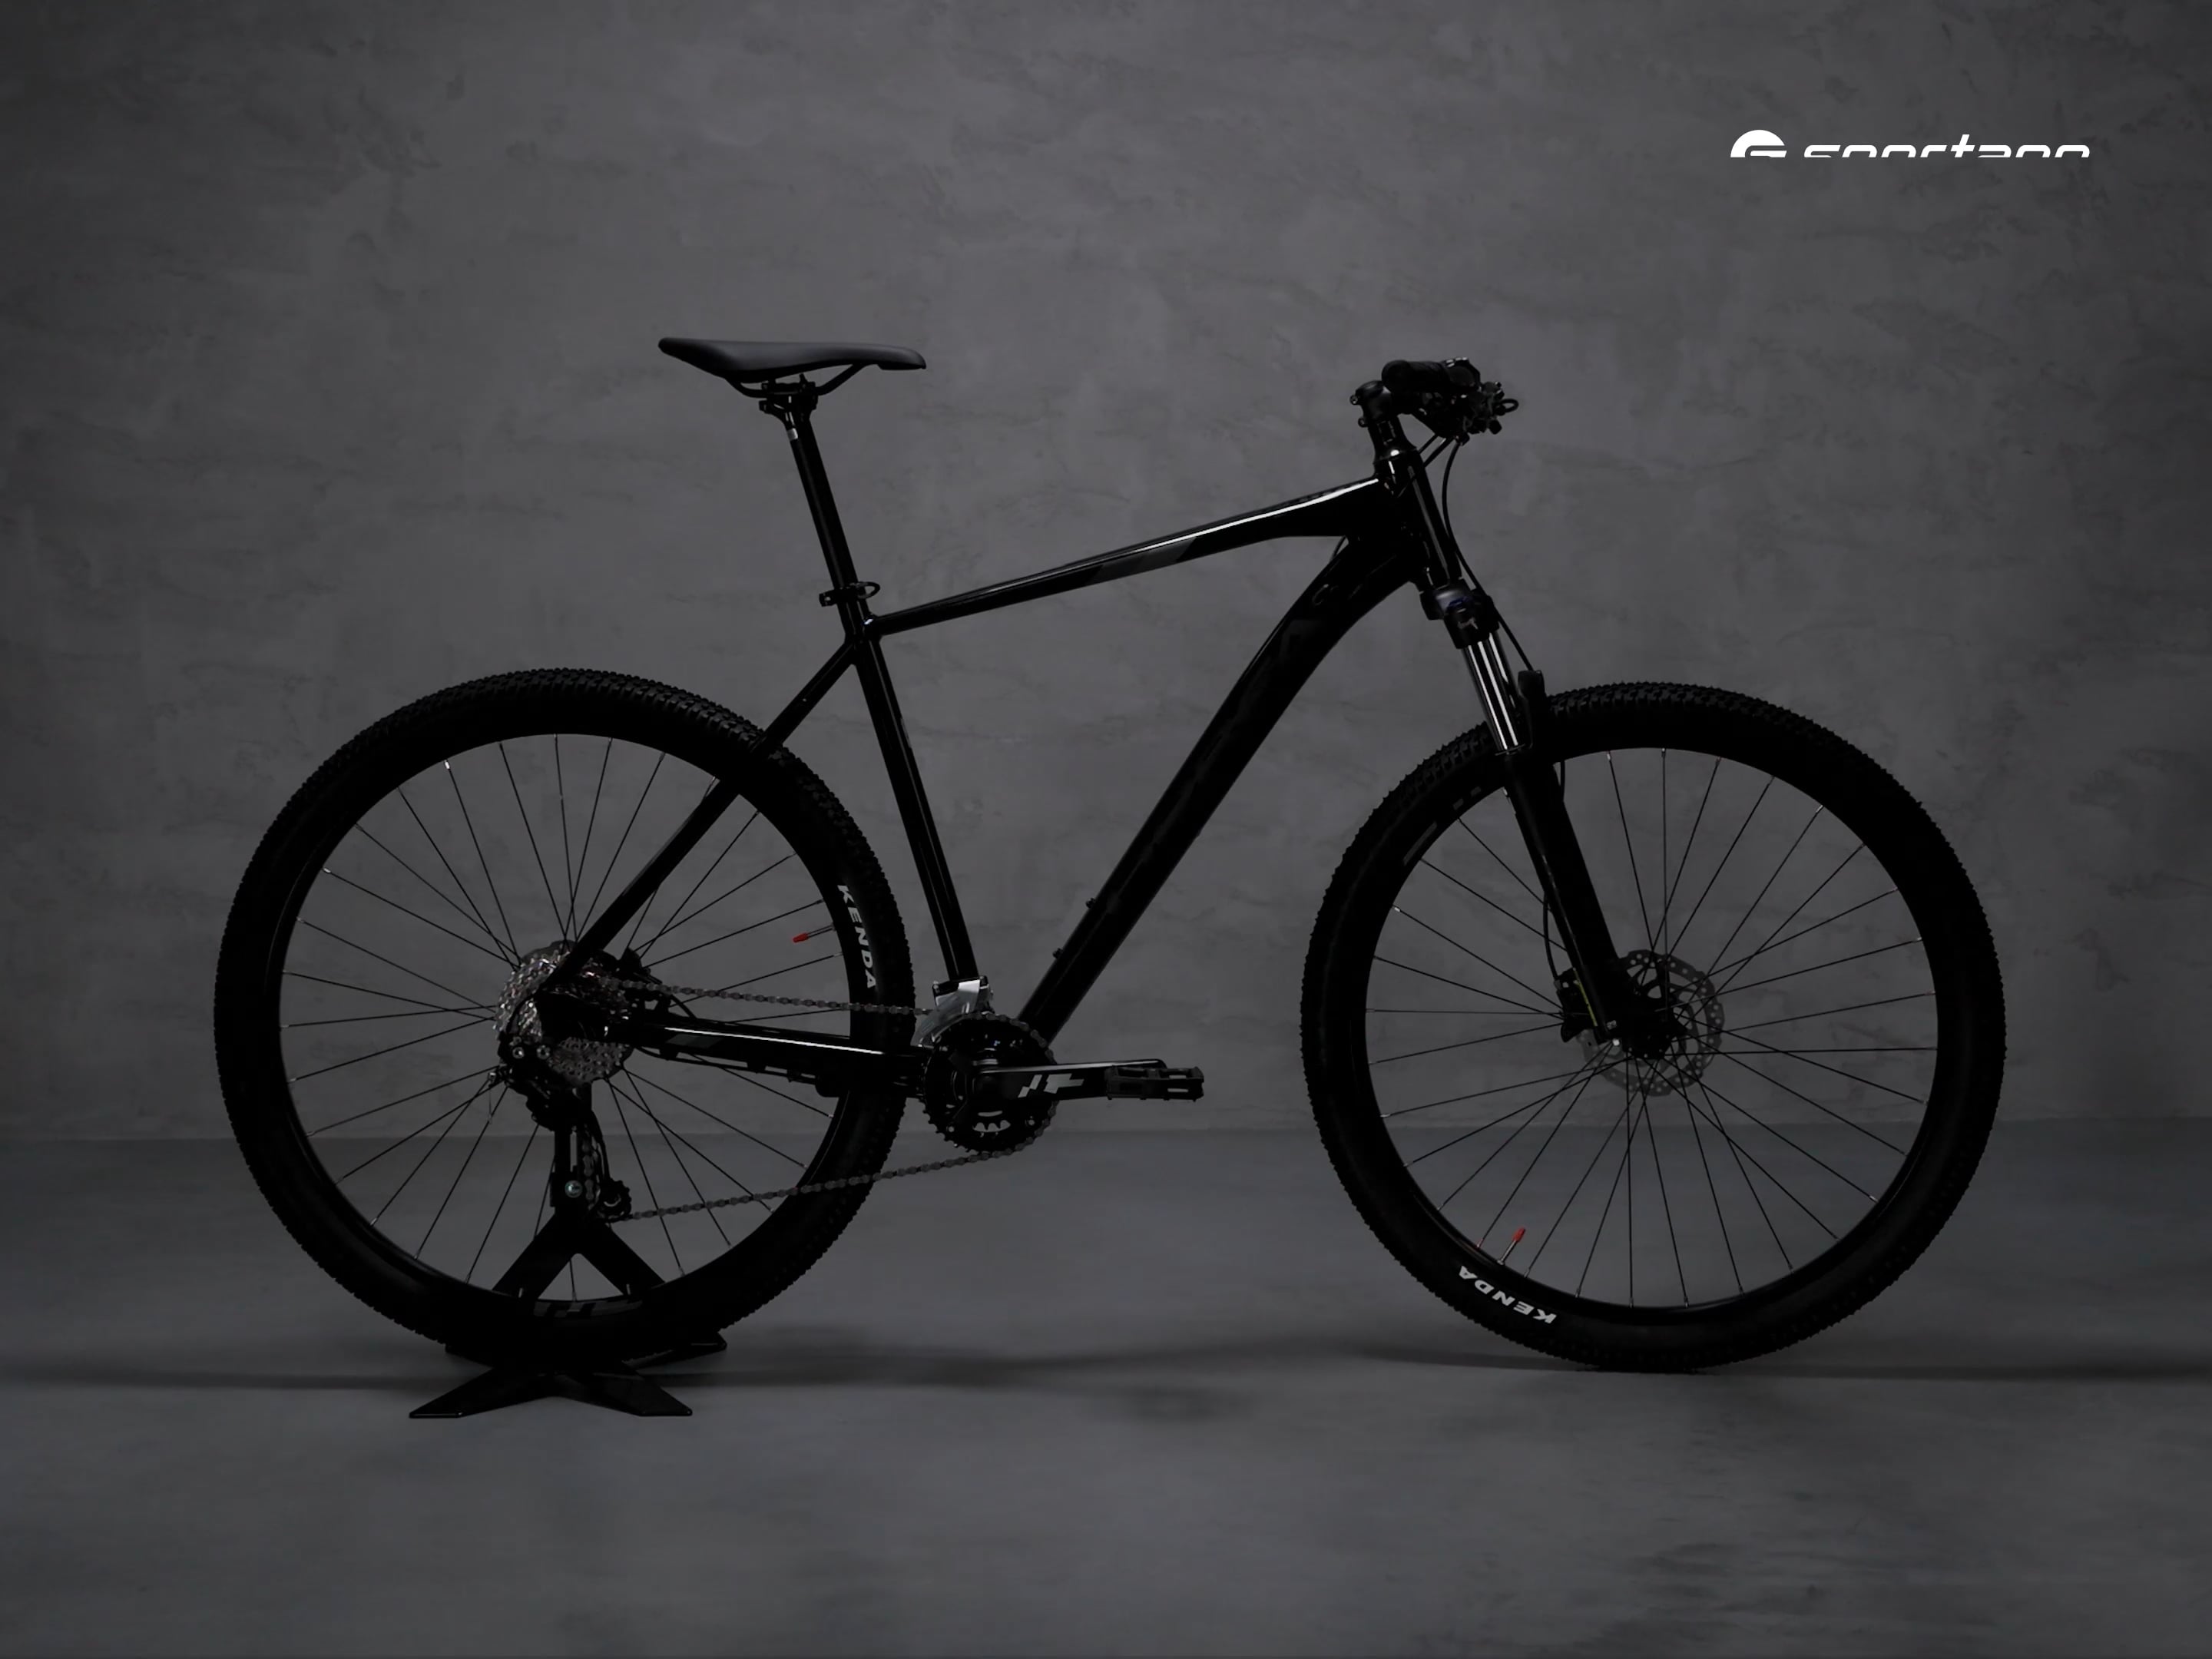 Orbea MX 27 50 планински велосипед черен